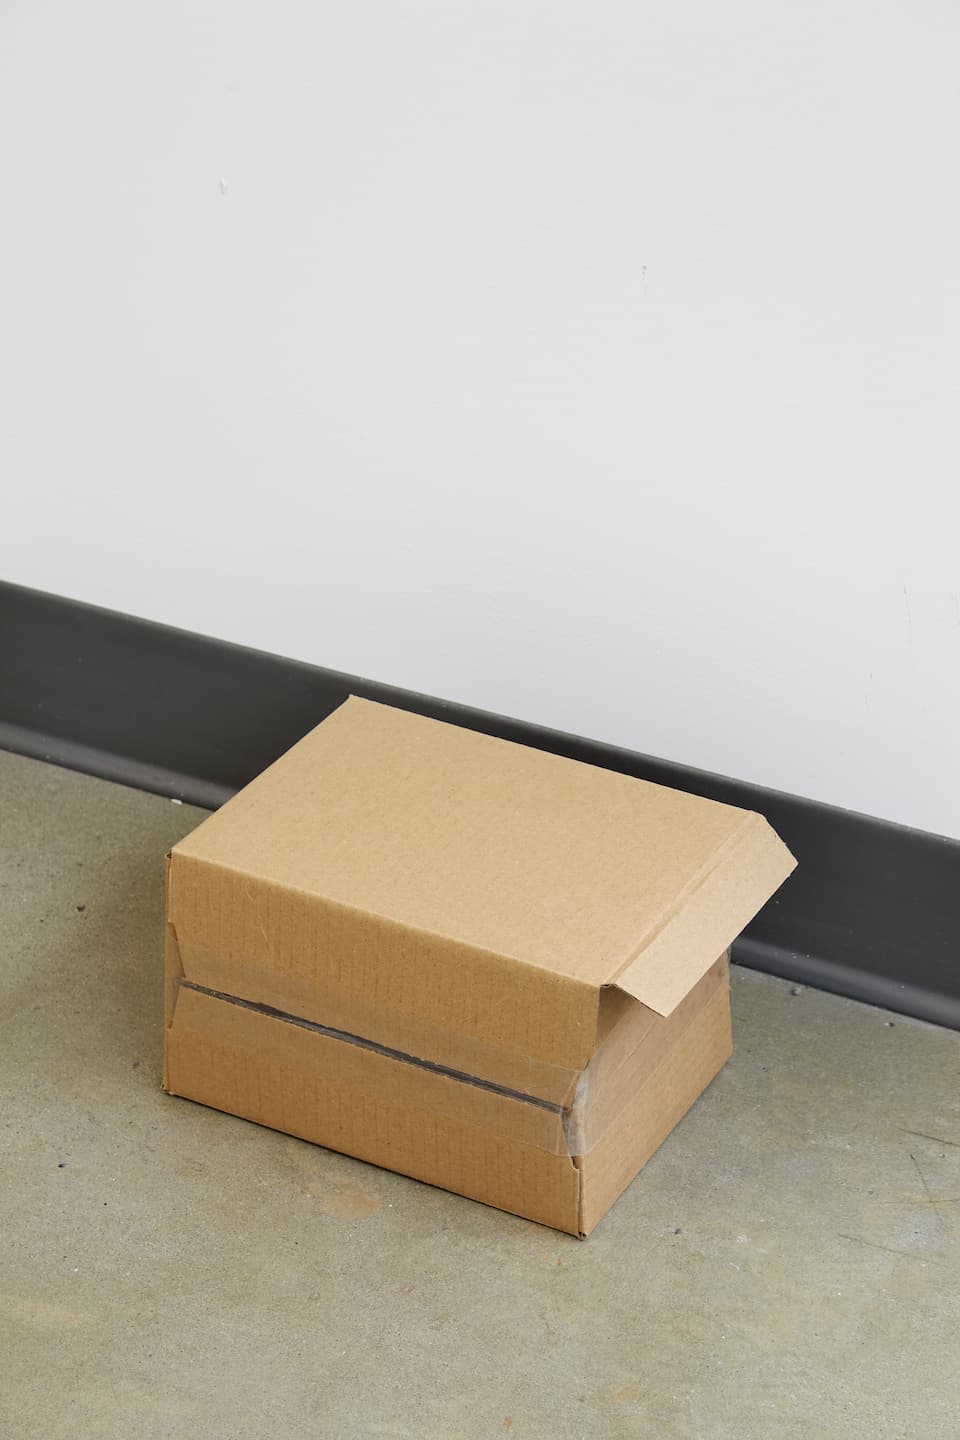 Loïc Blairon, Untitled, 2018. Carton, 30 x 18 x 17 cm. Achat à l’artiste. Collection IAC, © Loïc Blairon